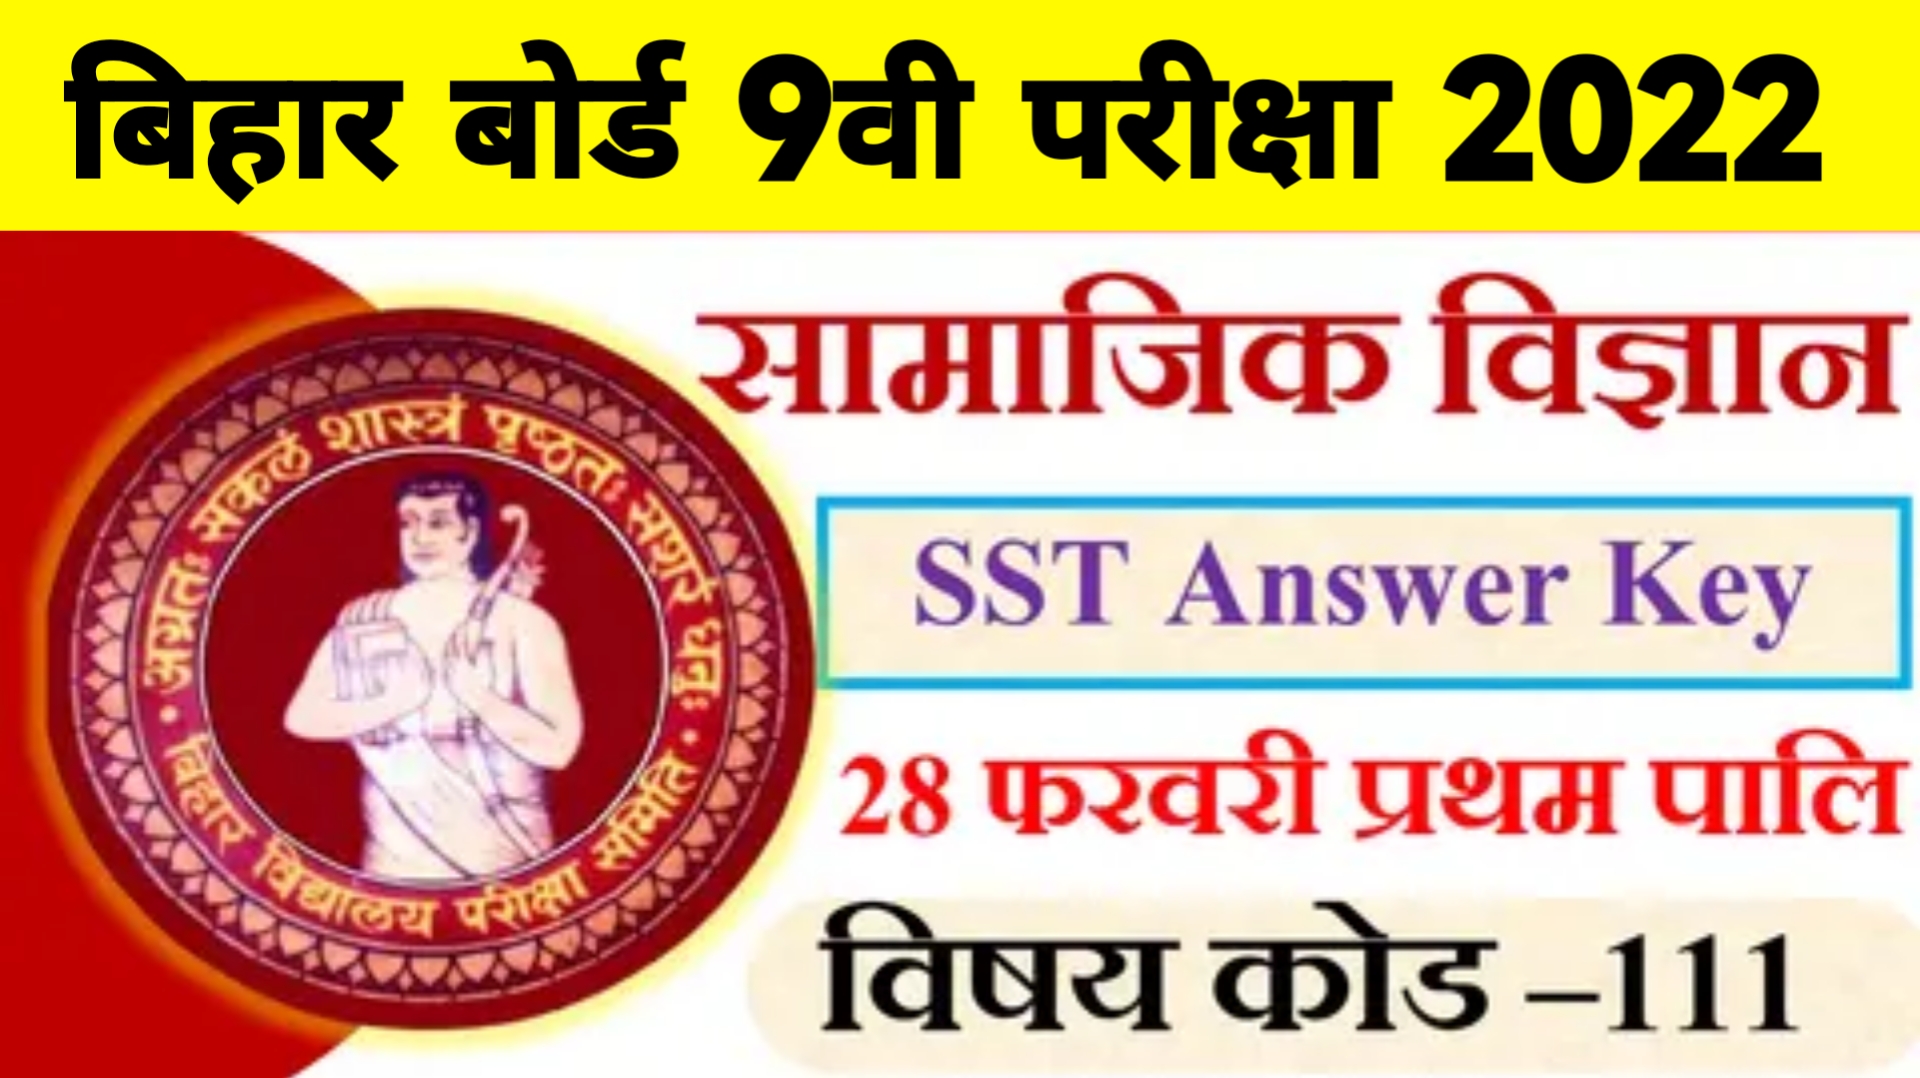 Bihar Board 9th Social Science Answer Key 2022 Pdf | Bihar Board 9th Social Science Question 2022